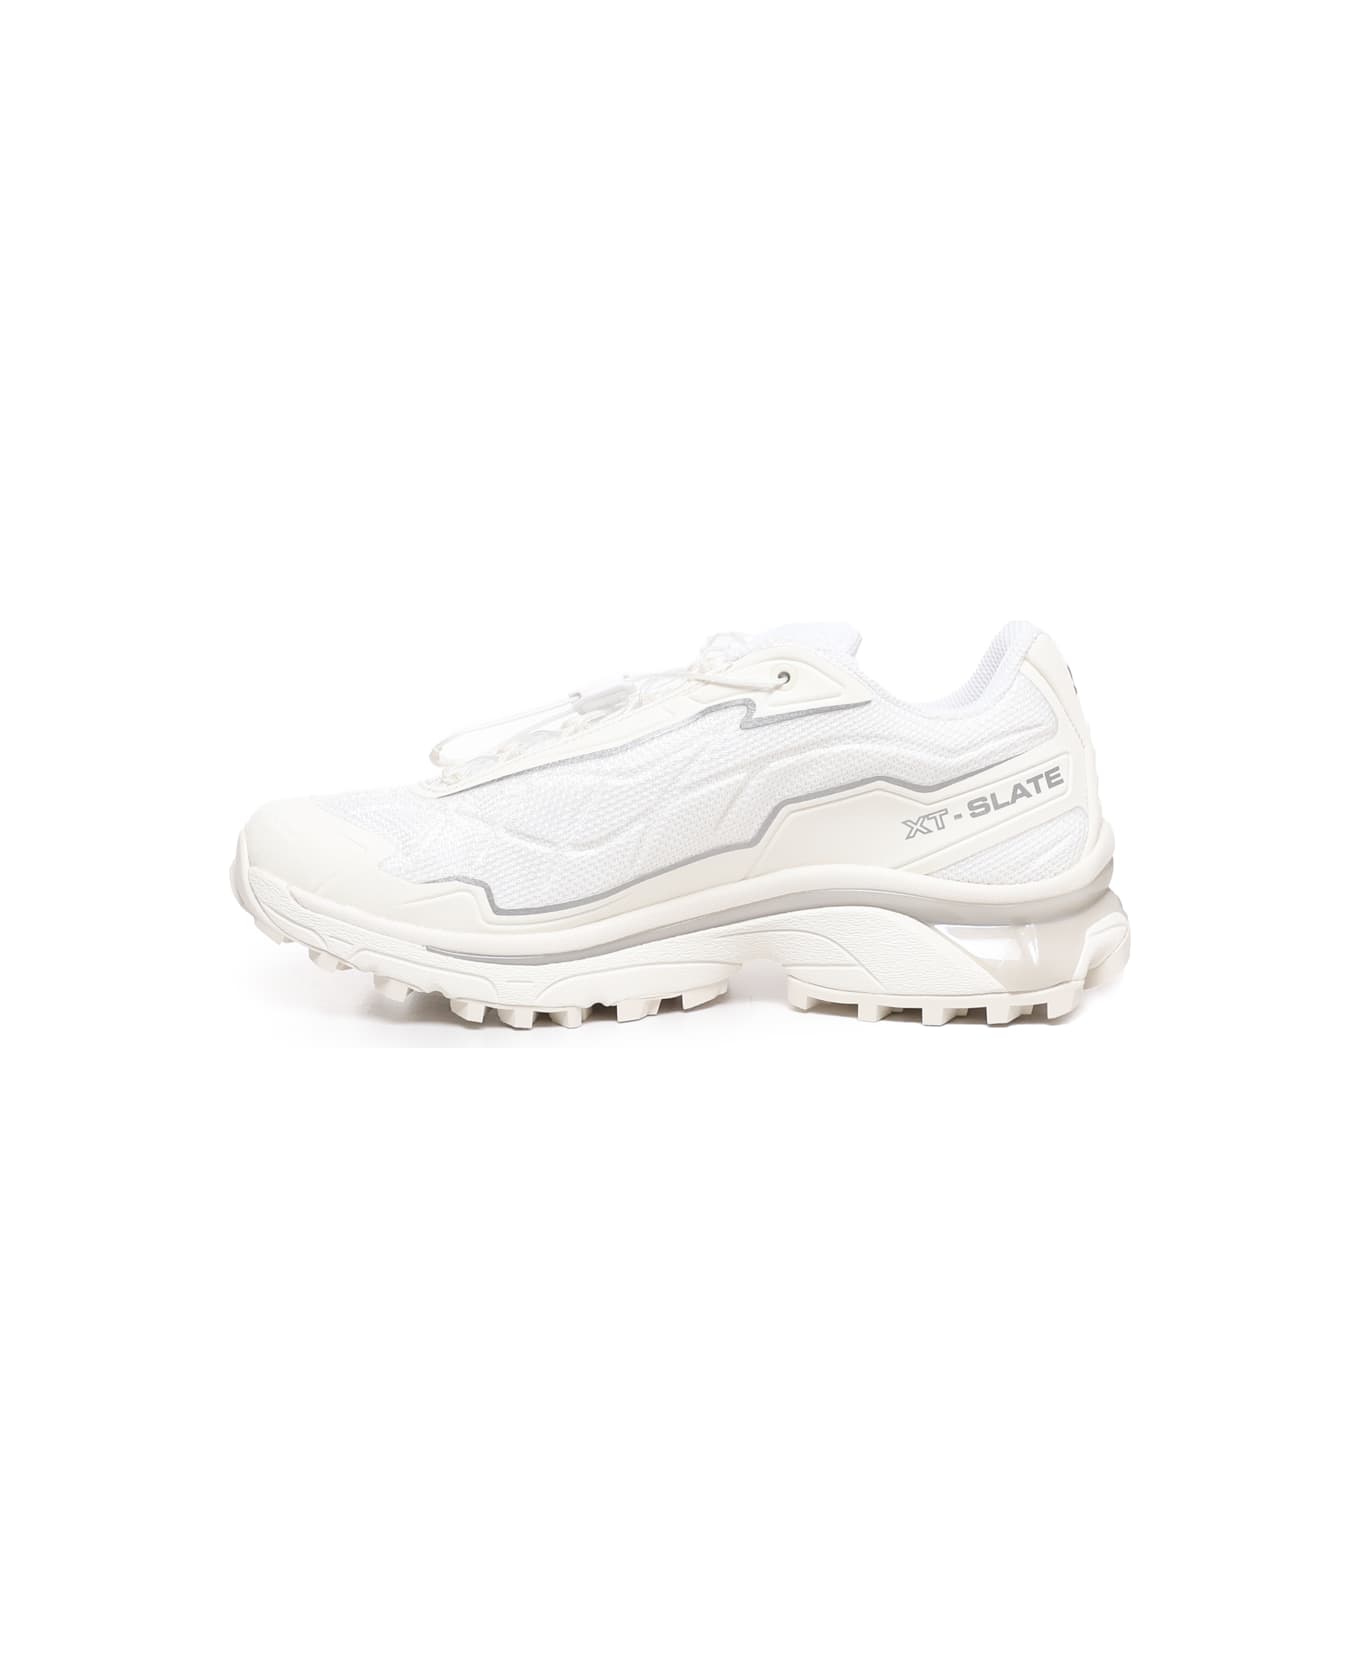 Salomon Xt-slate Sneakers - White